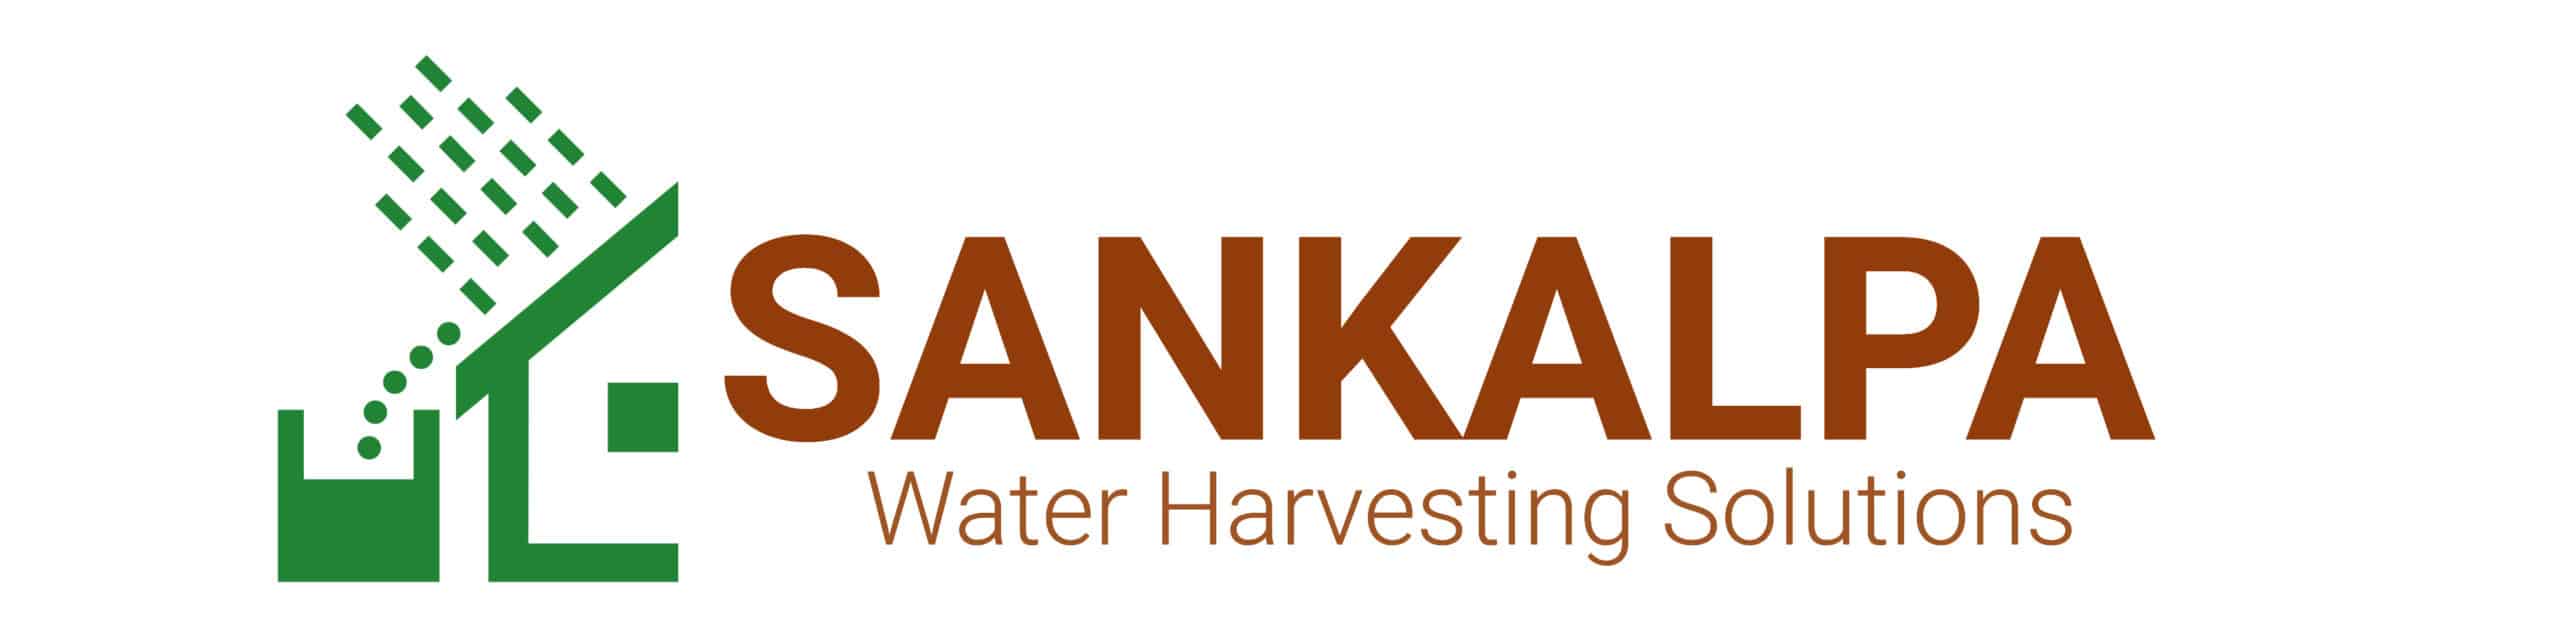 Sankalpa Water Harvesting Solutions